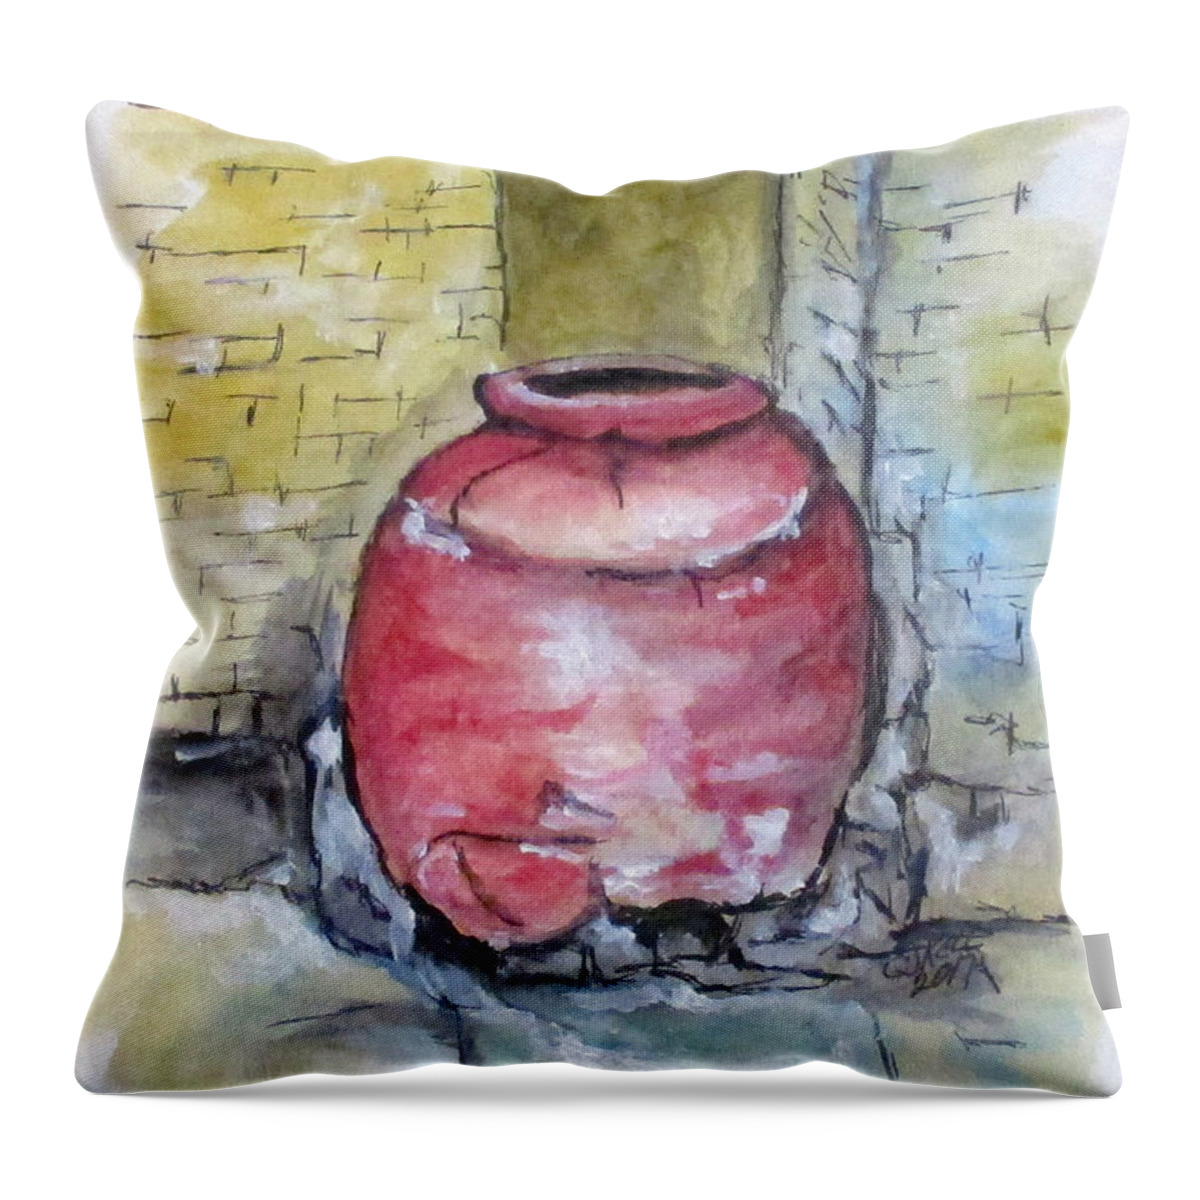 Amphora Throw Pillow featuring the painting Herculaneum Amphora Pot by Clyde J Kell